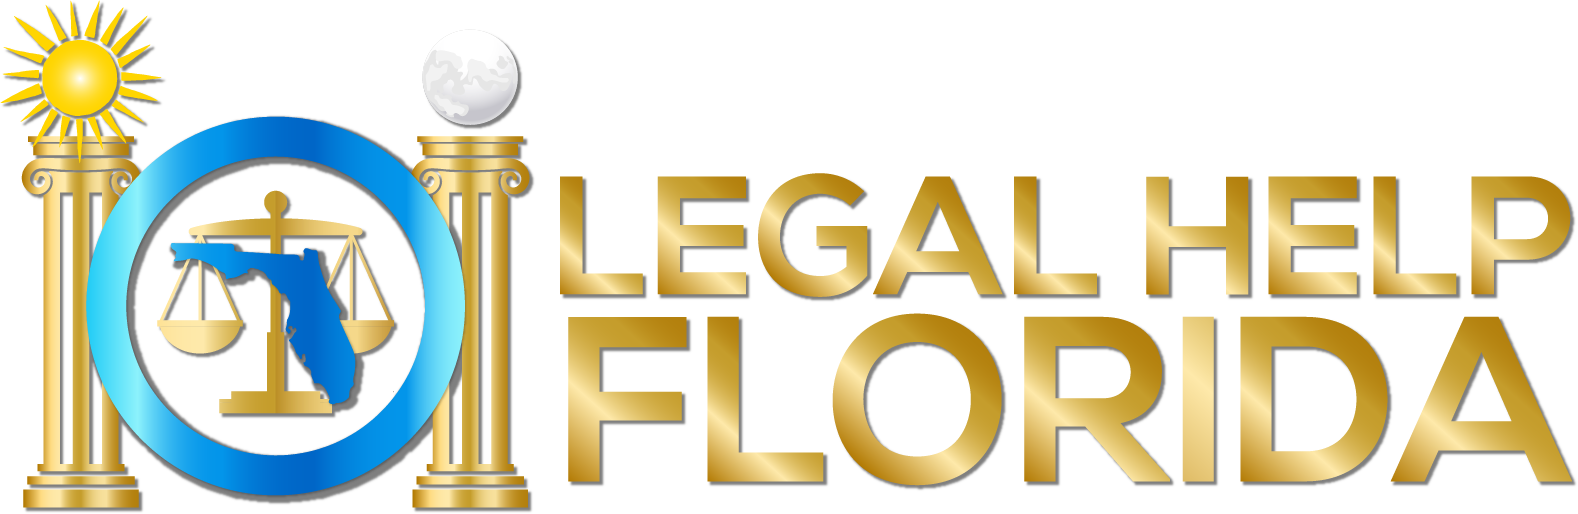 Florida Legal Help